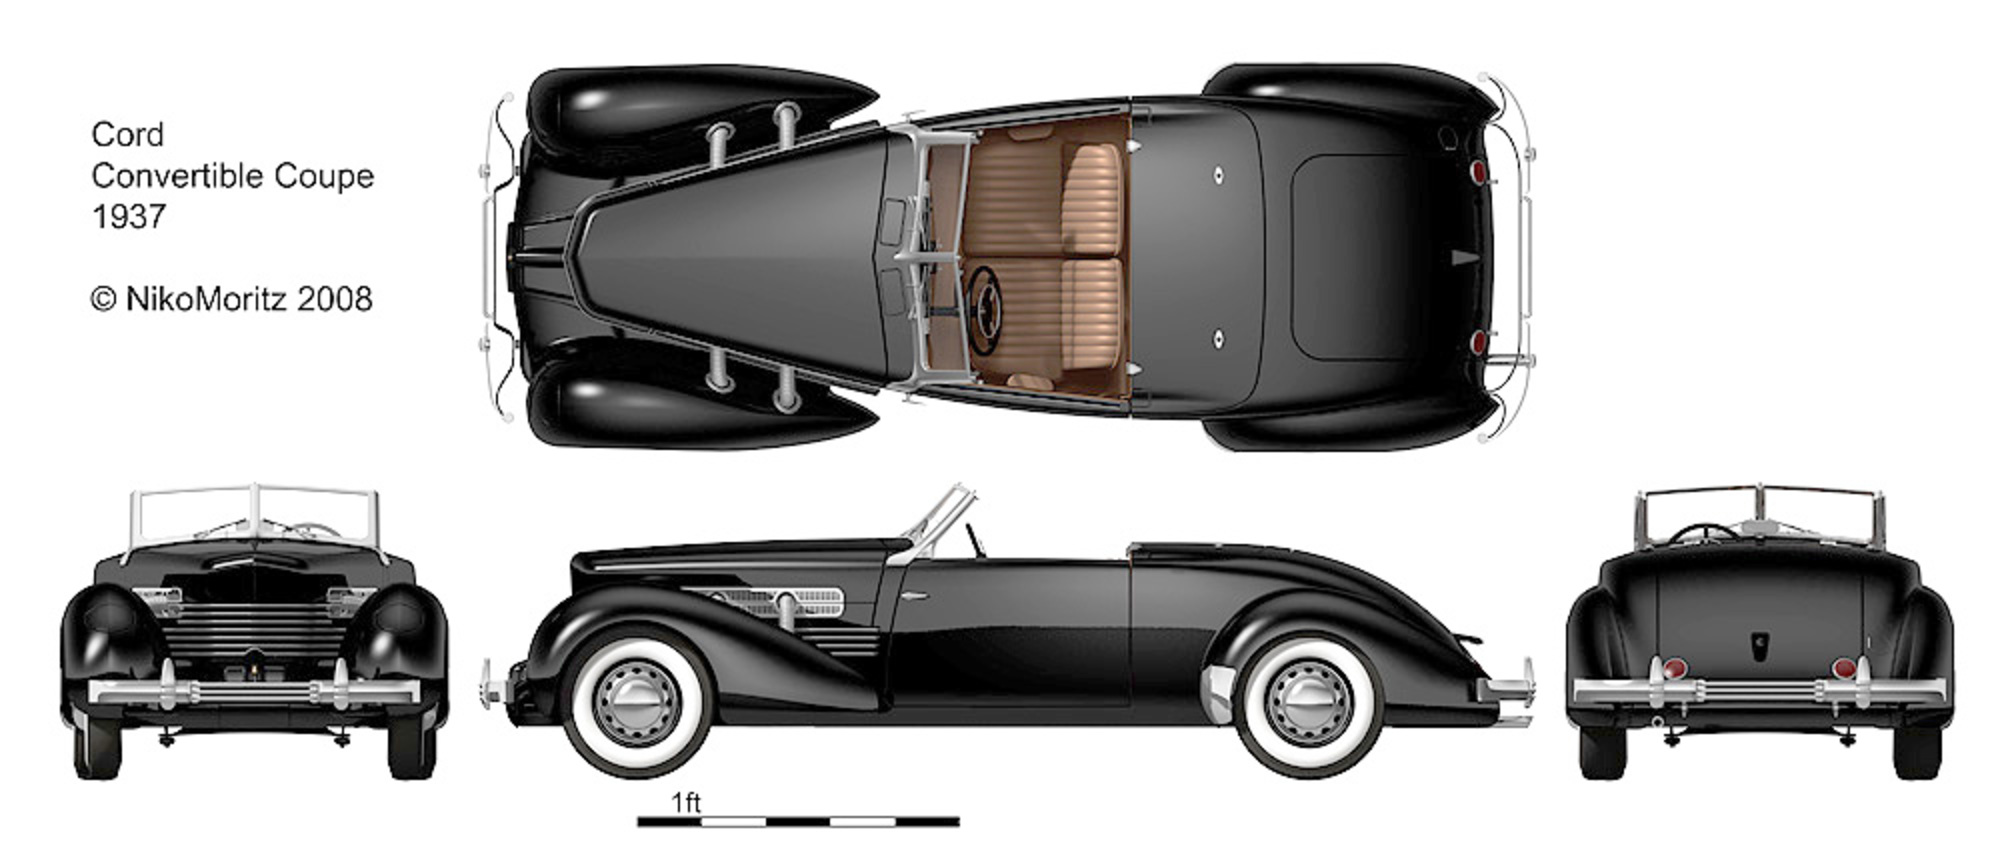 Cord Convertible Coupe 1937